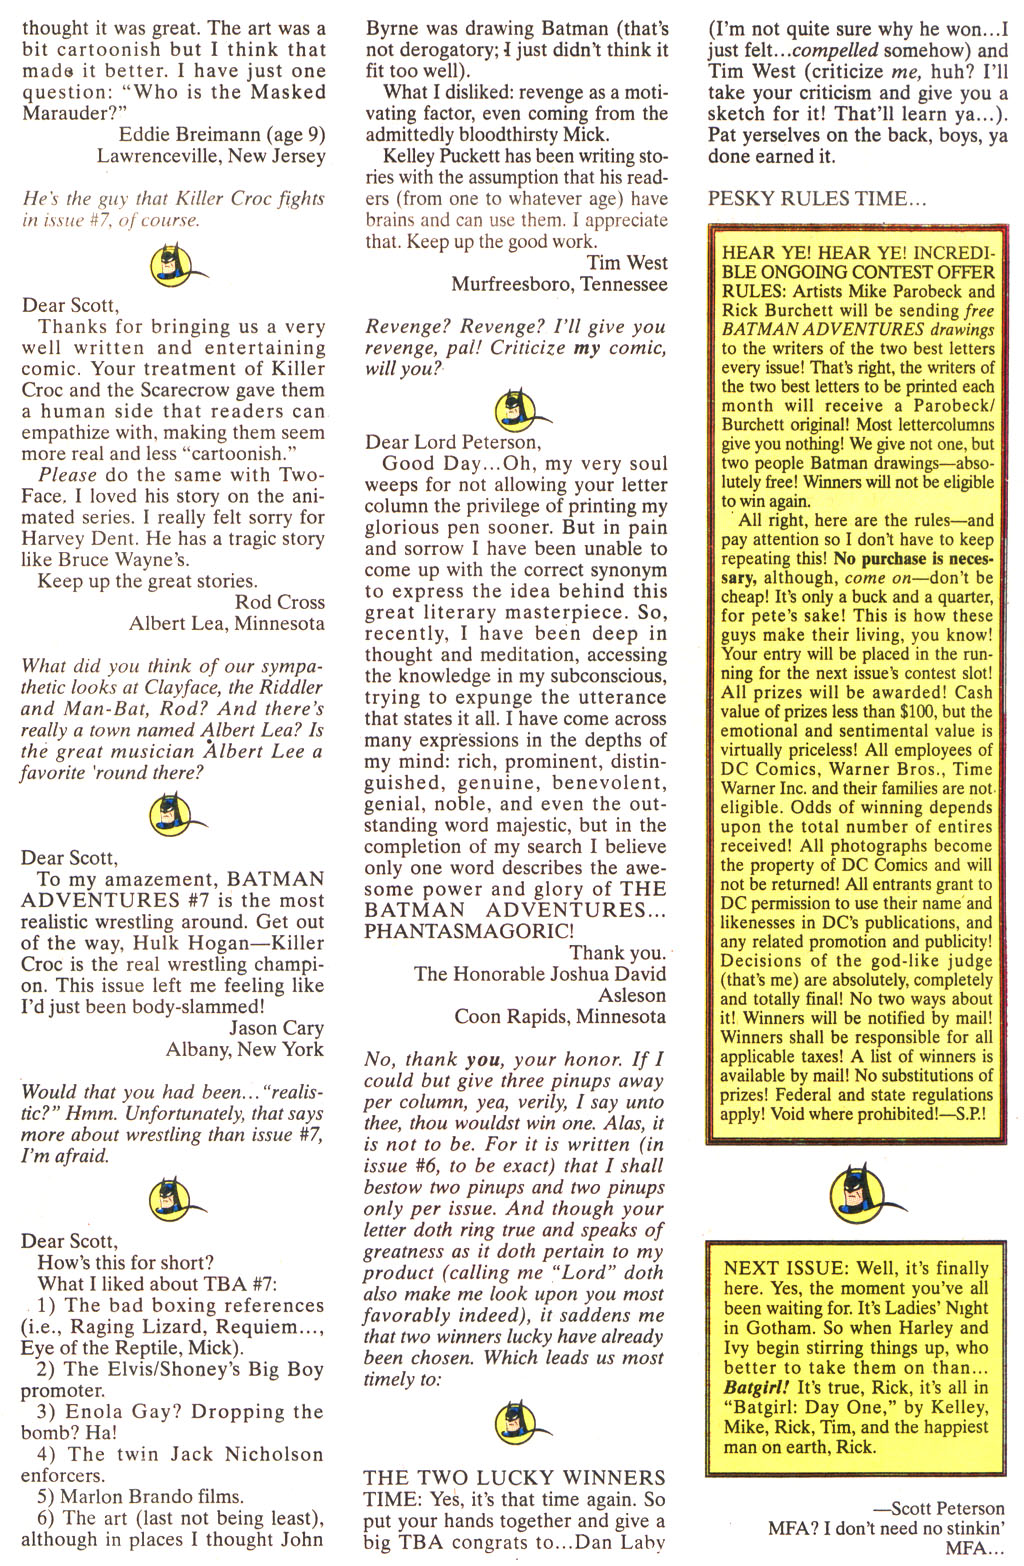 Read online The Batman Adventures comic -  Issue #11 - 25